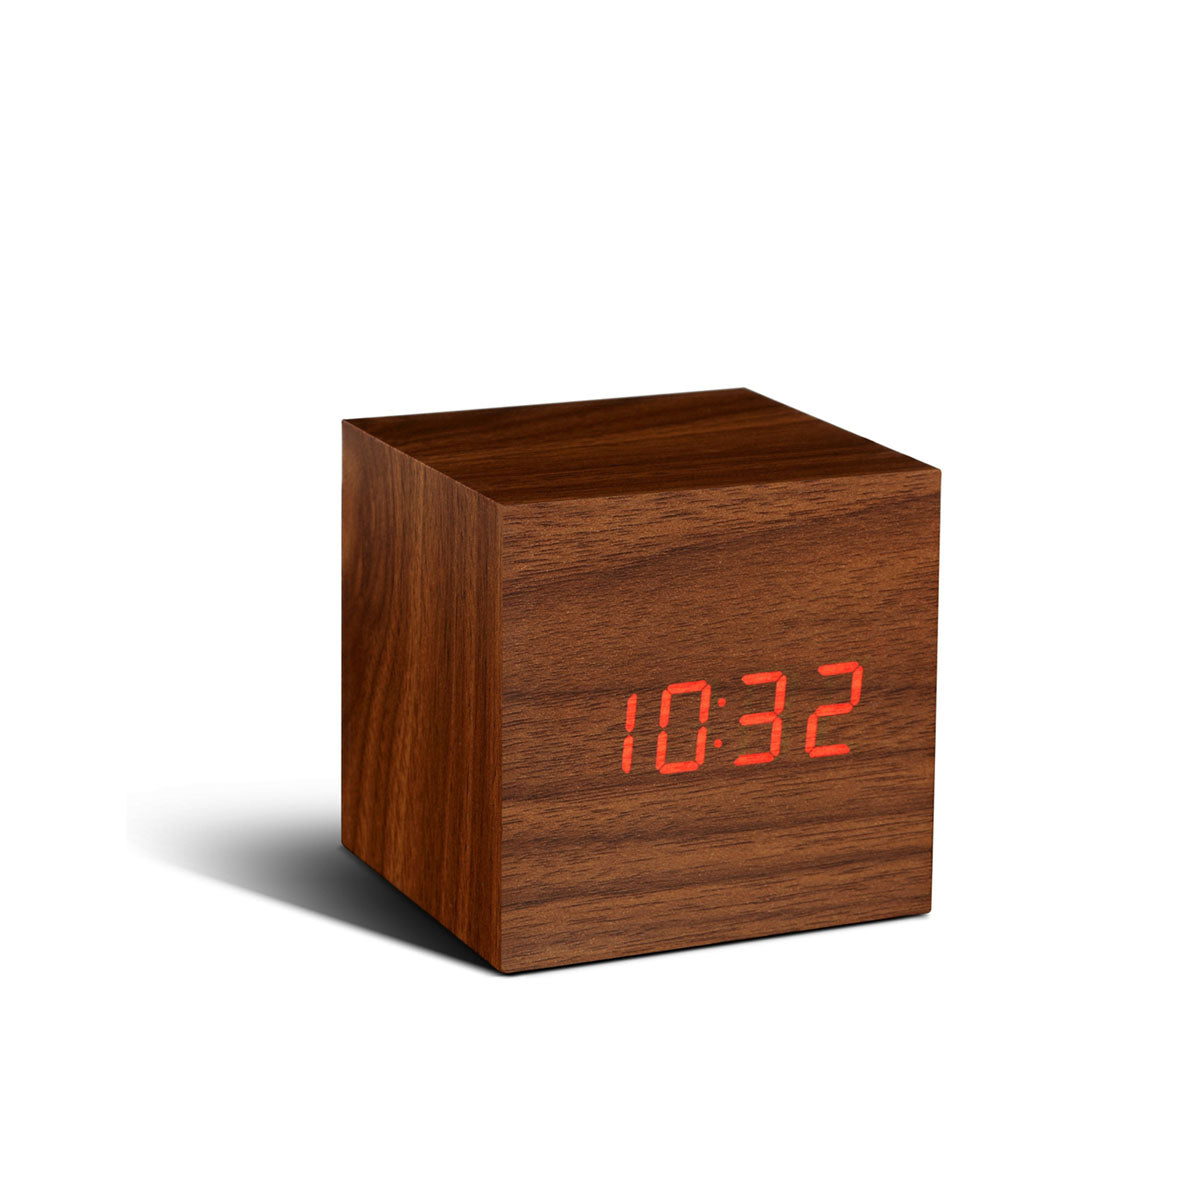 The Cube Click Clock: Walnut on display.